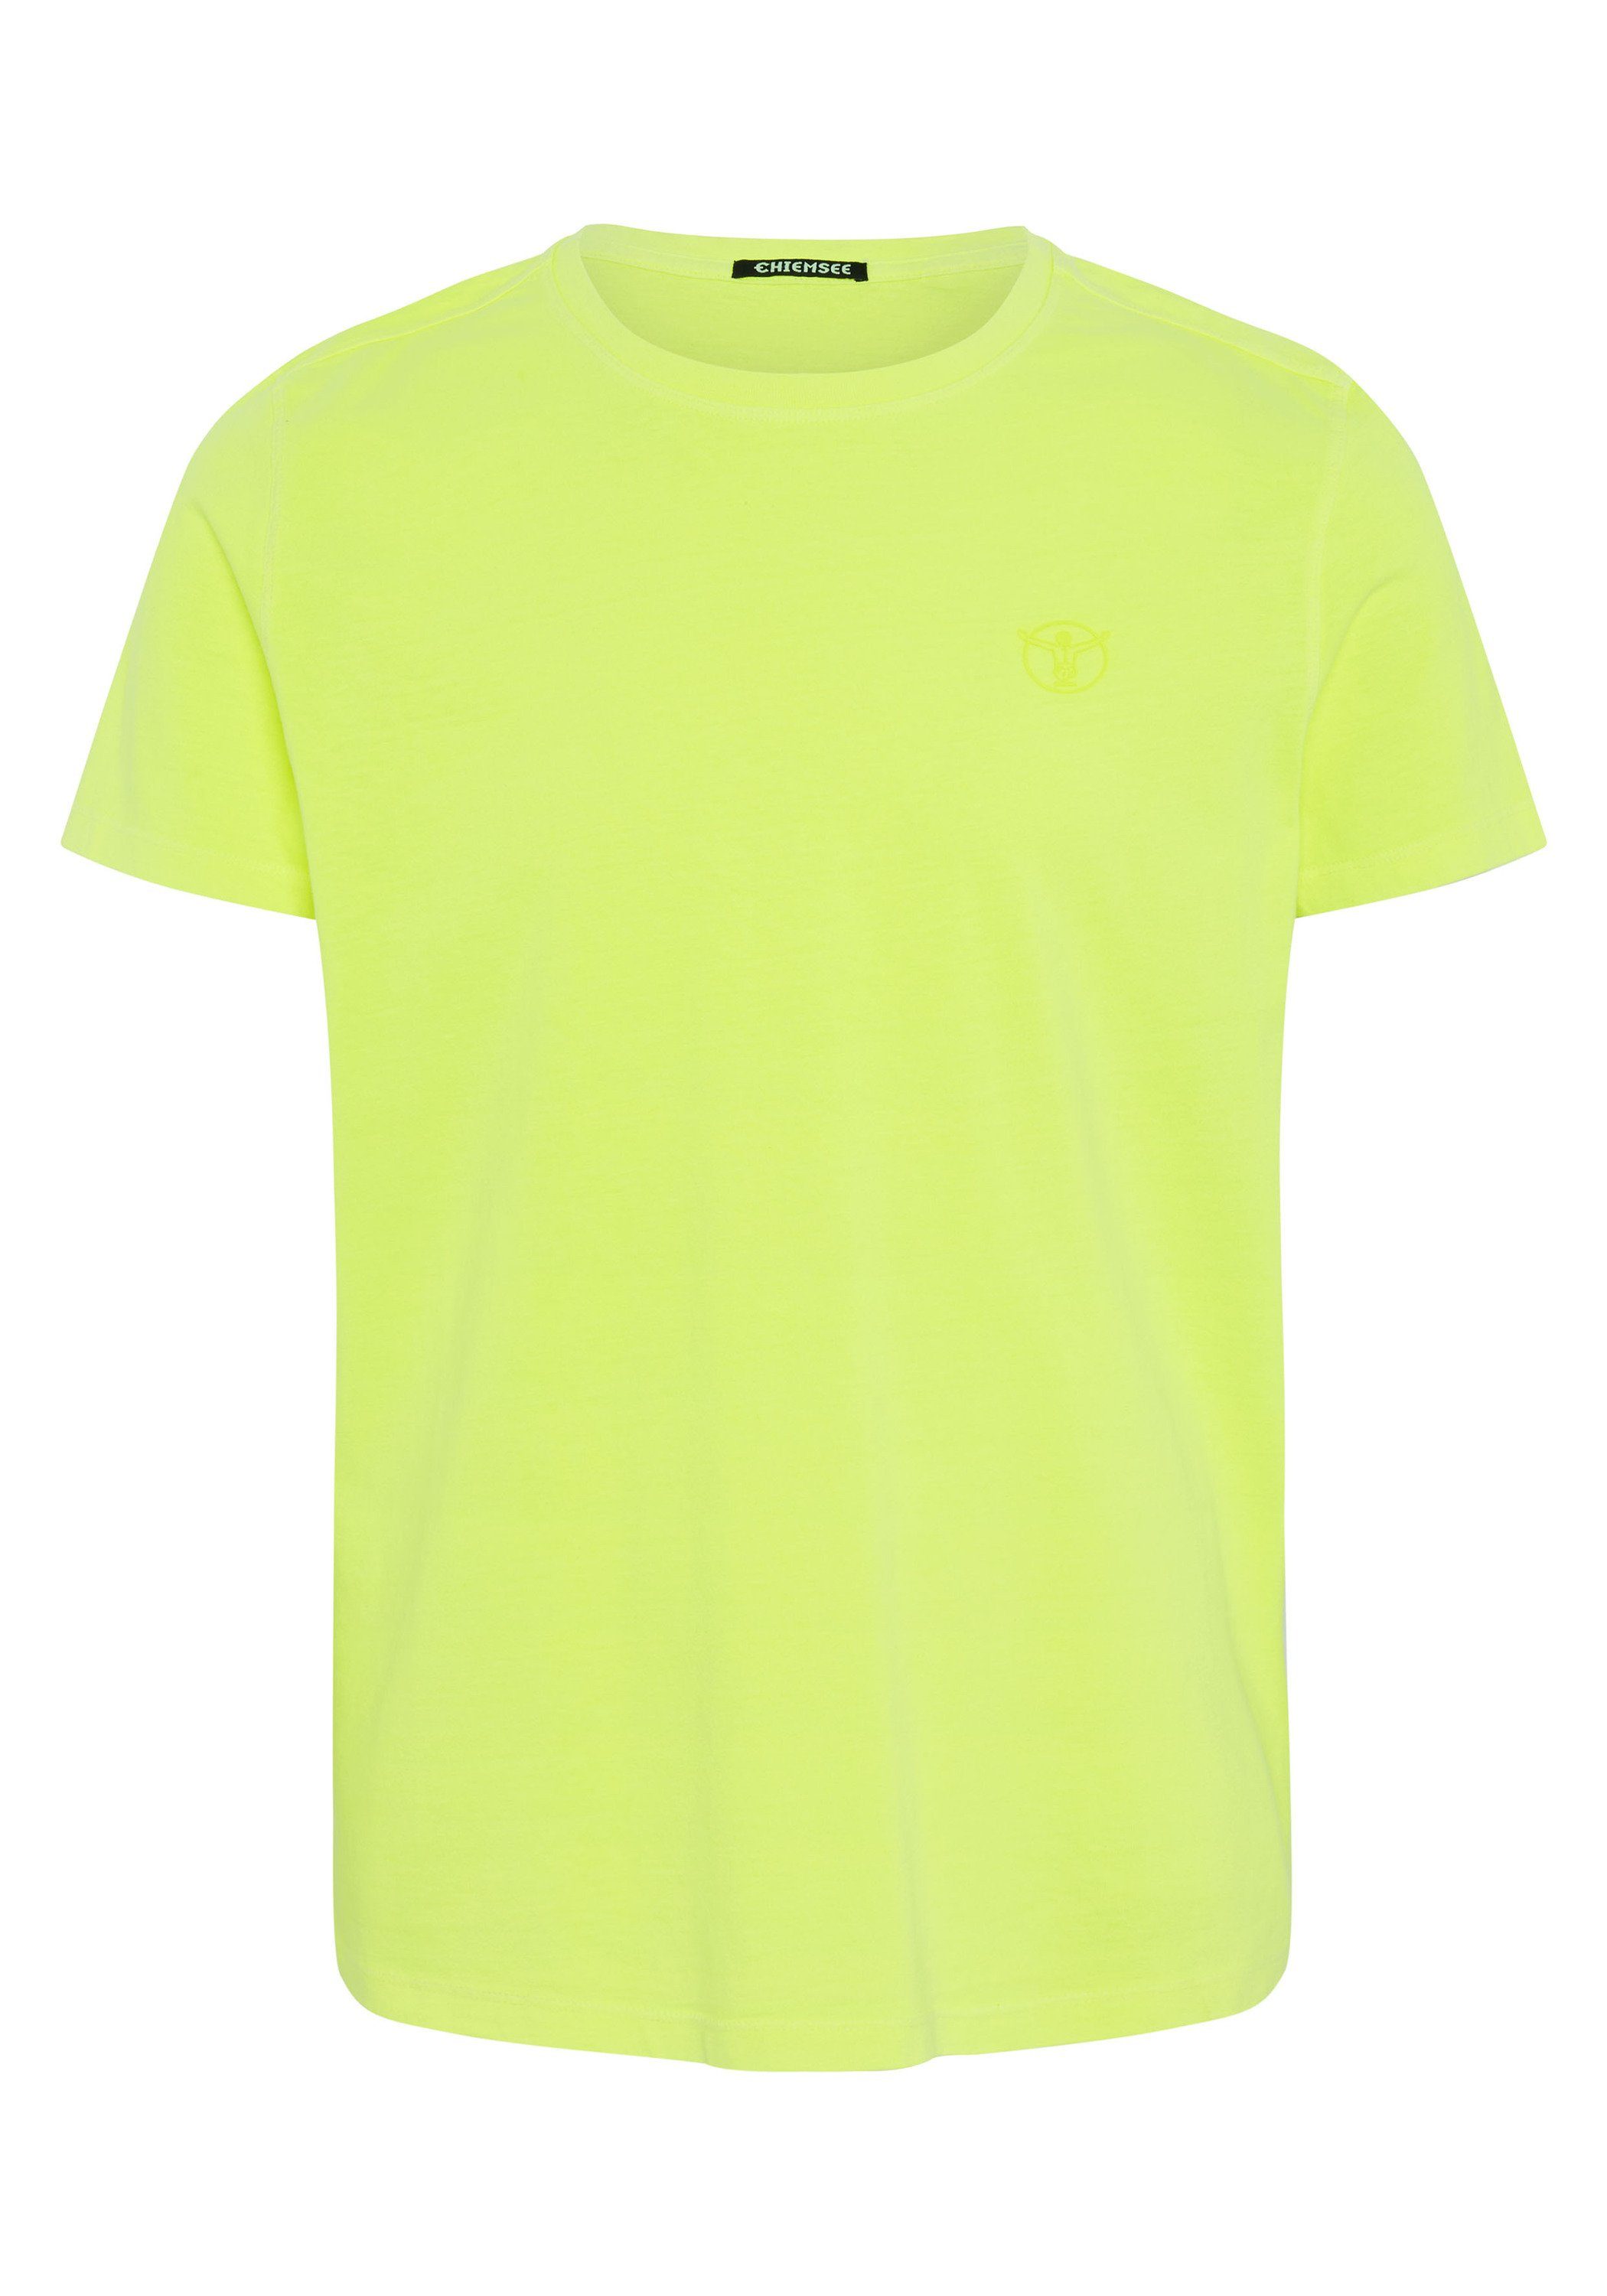 Safety aus Print-Shirt Baumwolle Yellow 1 T-Shirt Chiemsee 13-0630